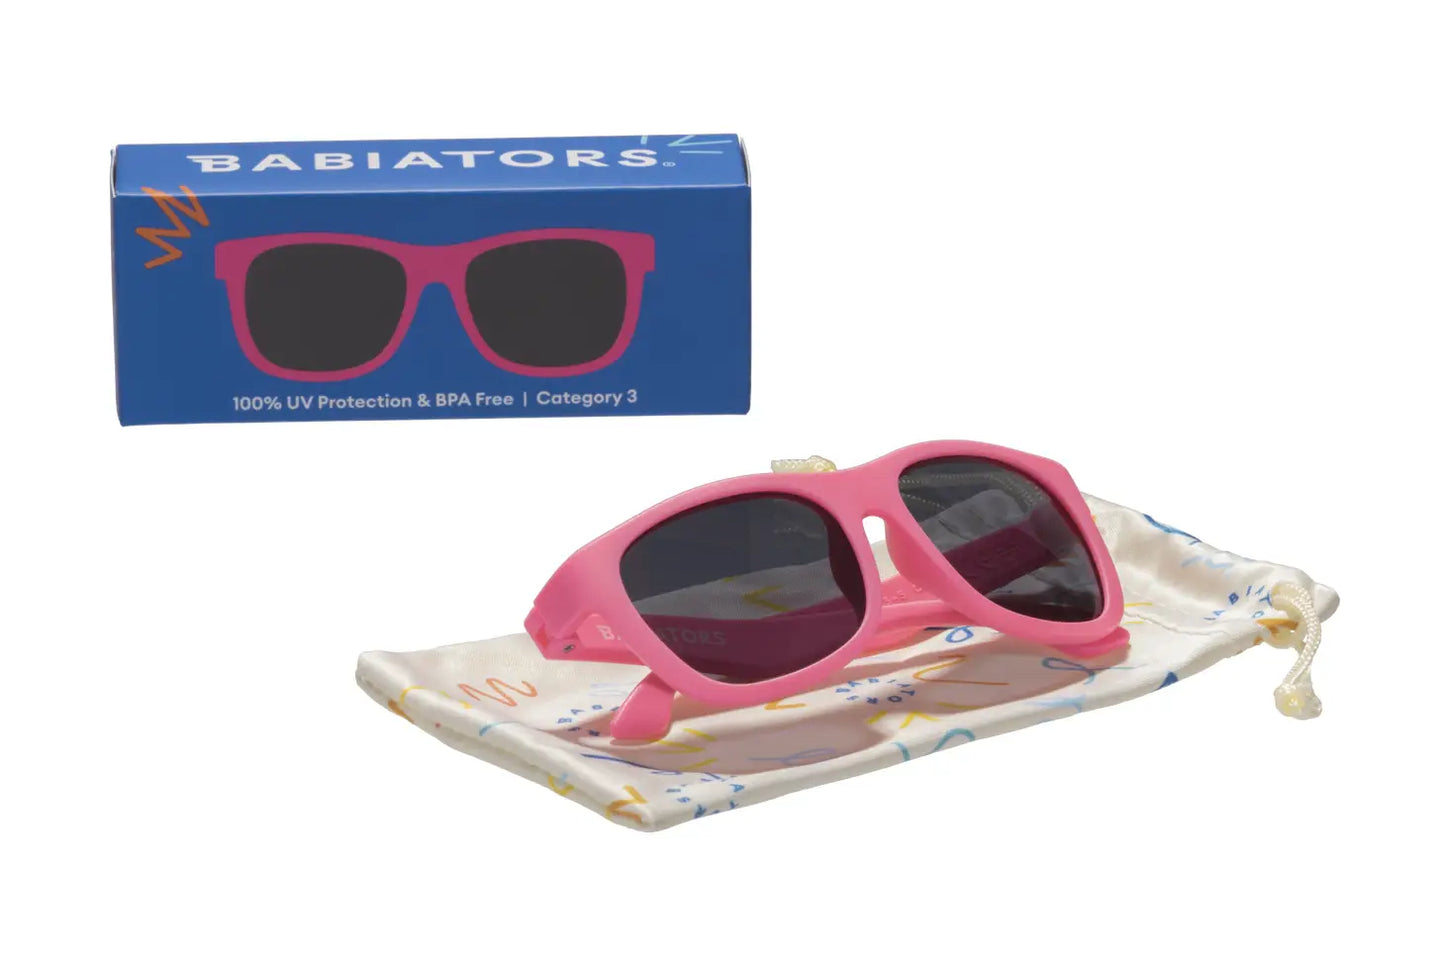 Think Pink! - Navigator Sunglasses